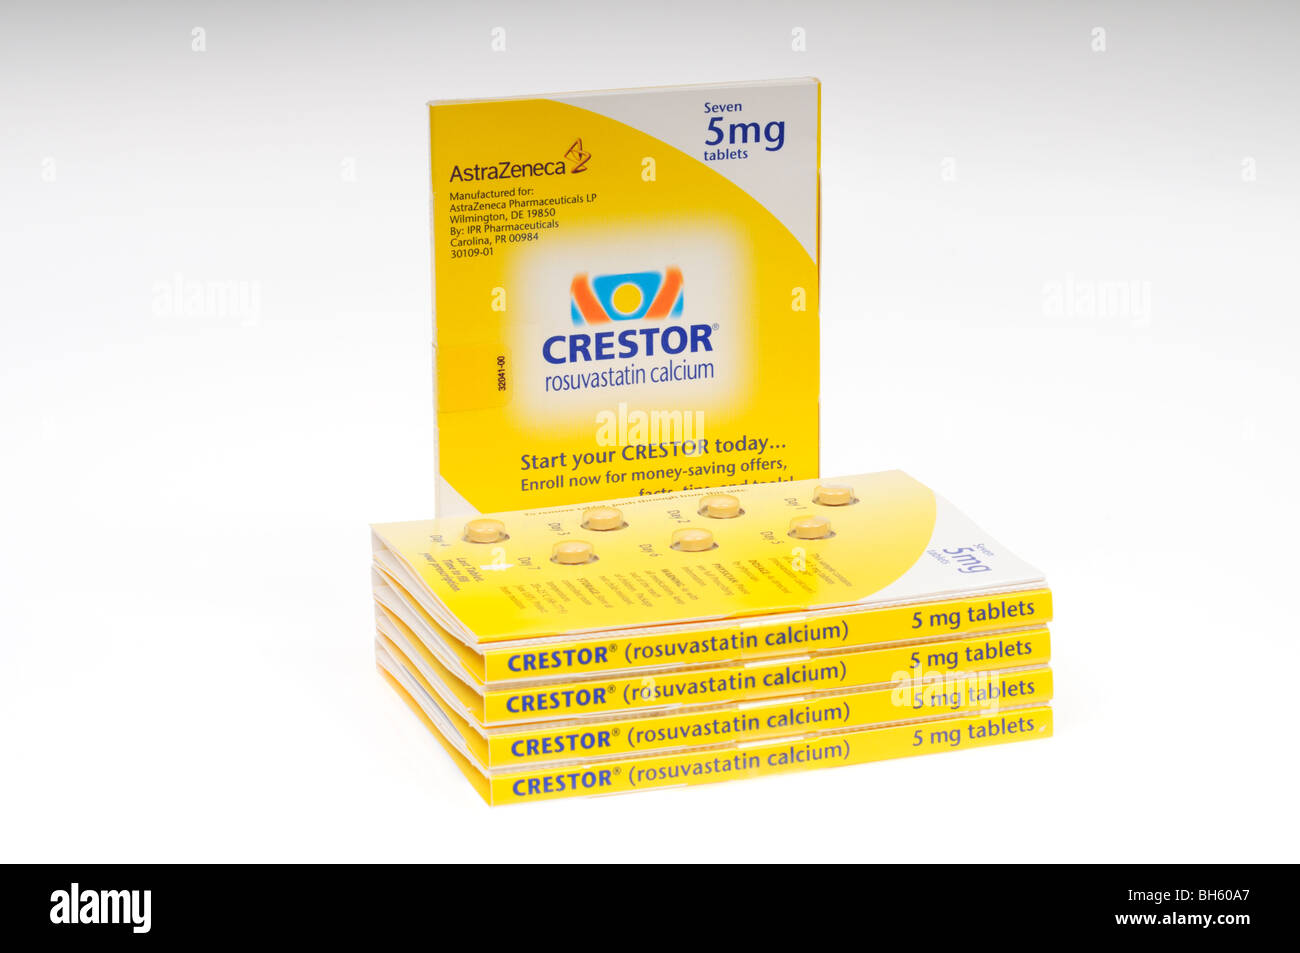 Crestor cholesterol lowering statin prescription drug package of pills on white background, isolated. Stock Photo